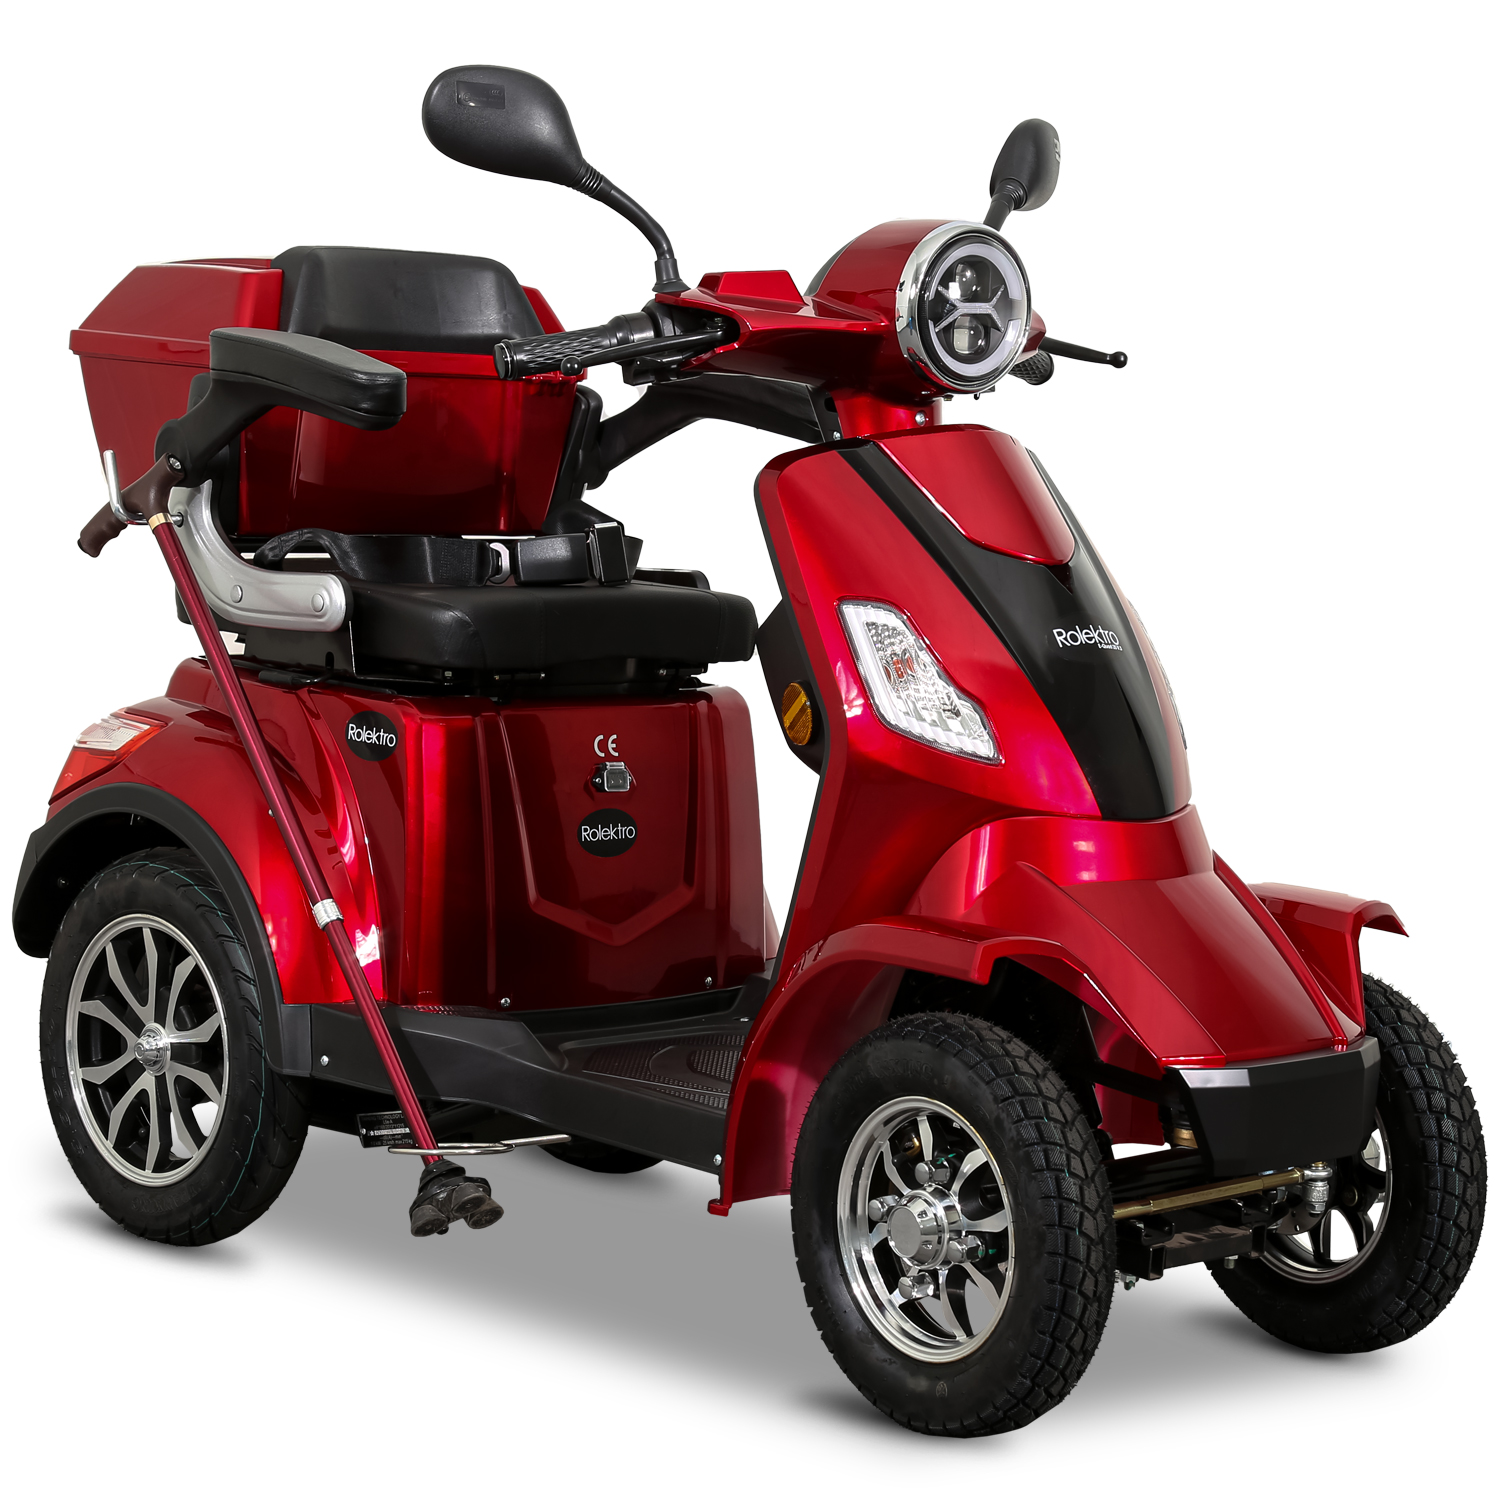 elektro2rad.de - Rolektro E-Quad 25 V3 red for seniors new at Elektro2Rad | Elektromobile